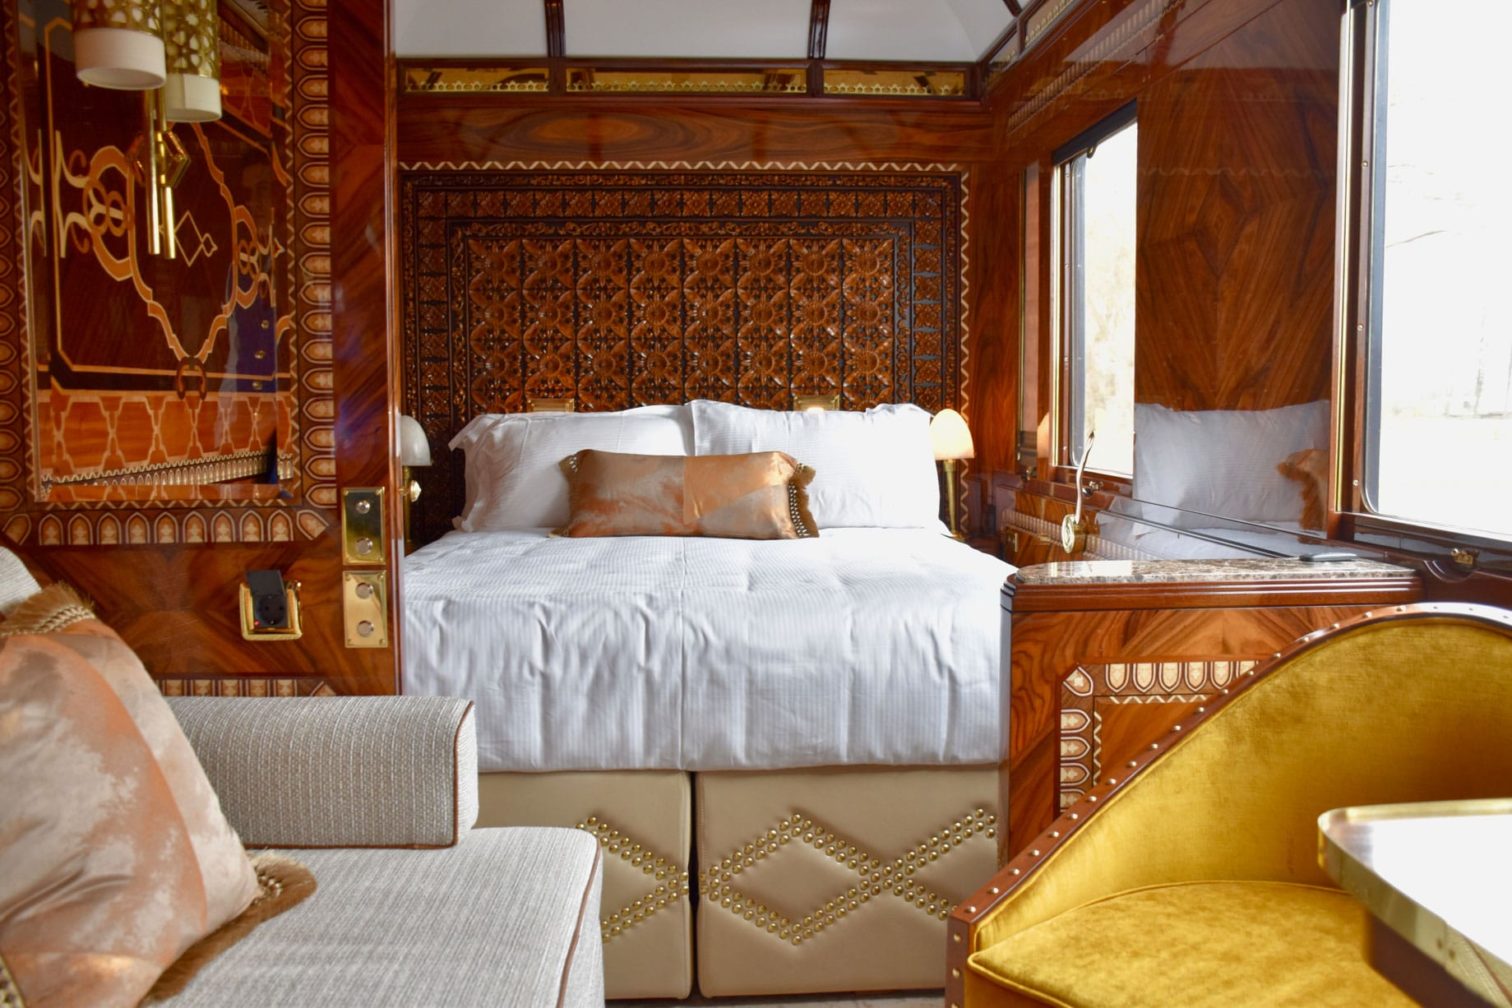 Venice Simplon-Orient-Express (VSOE) bedroom